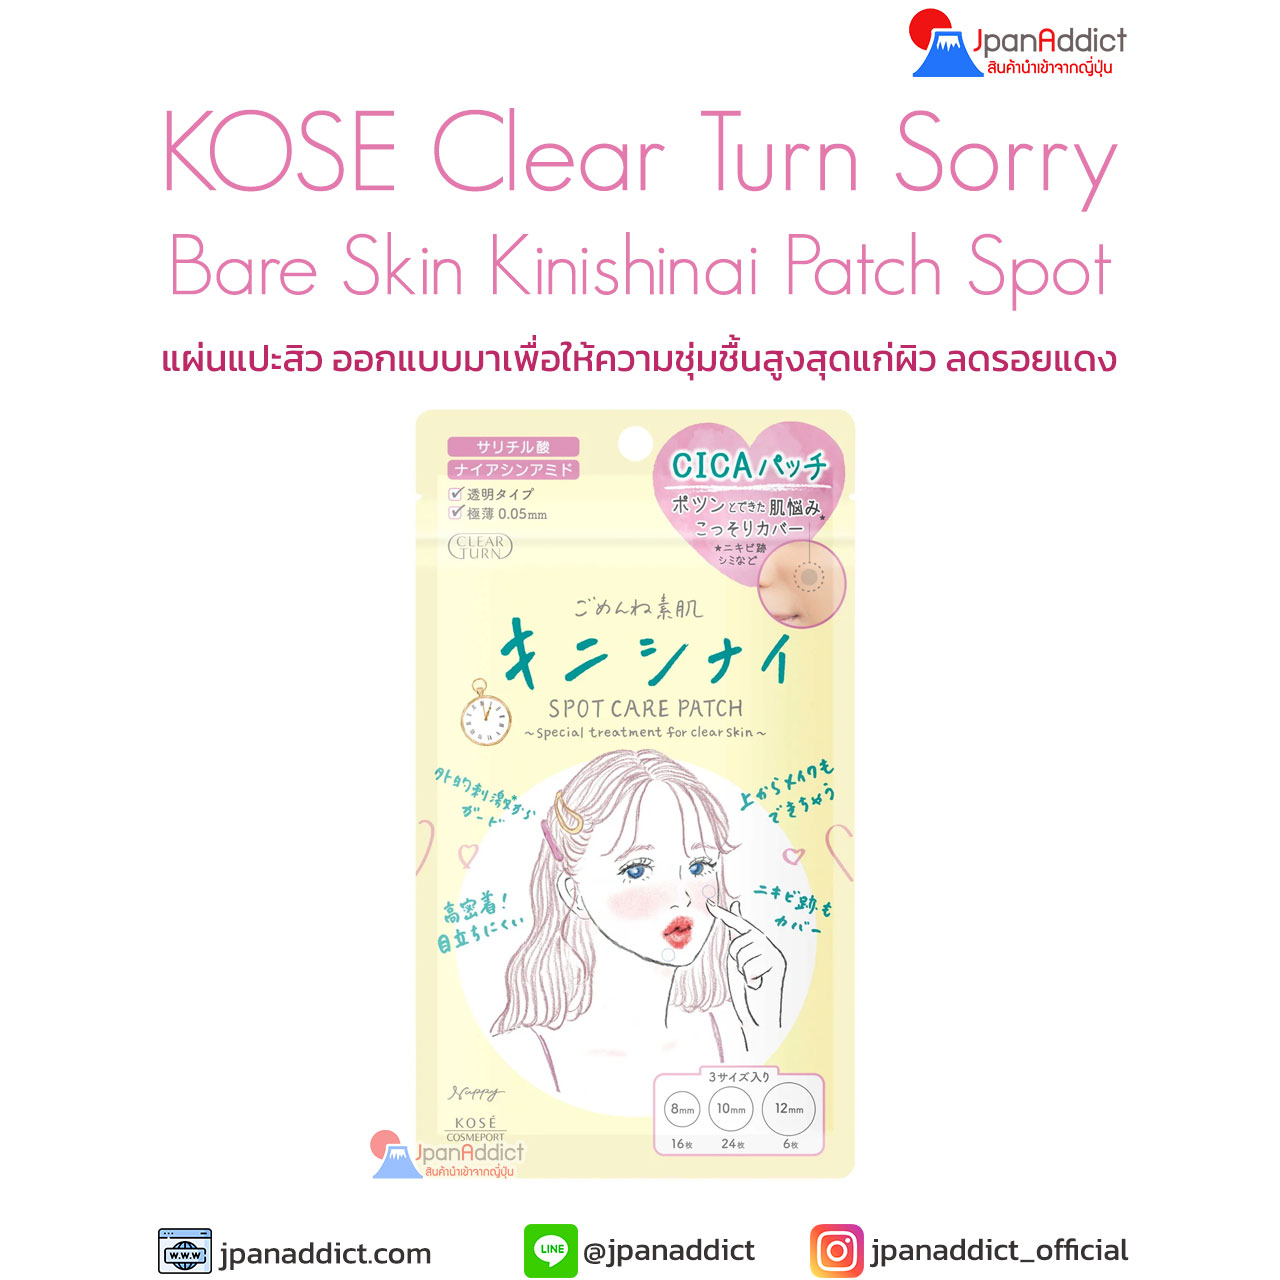 Kose Clear Turn Japan Gomenne Bare Skin Kinishinai Cica Spot Patch